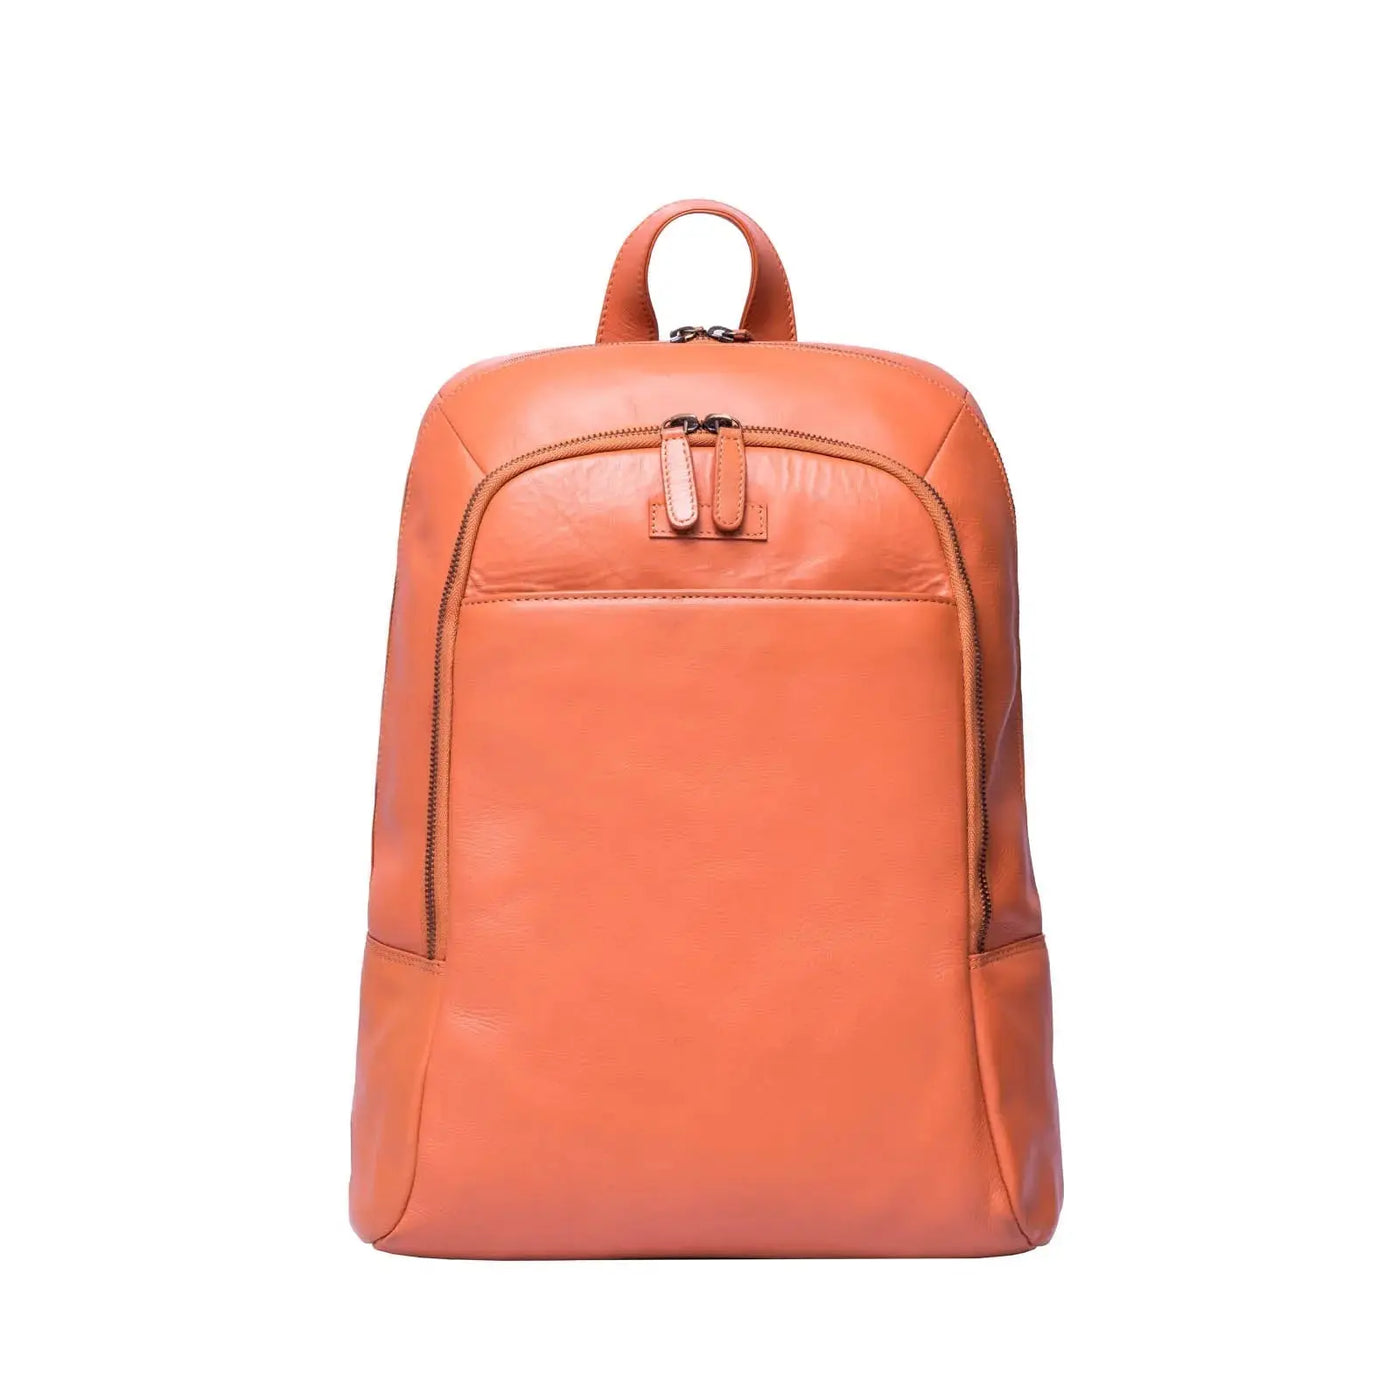 Ciudad Day- Backpack orange